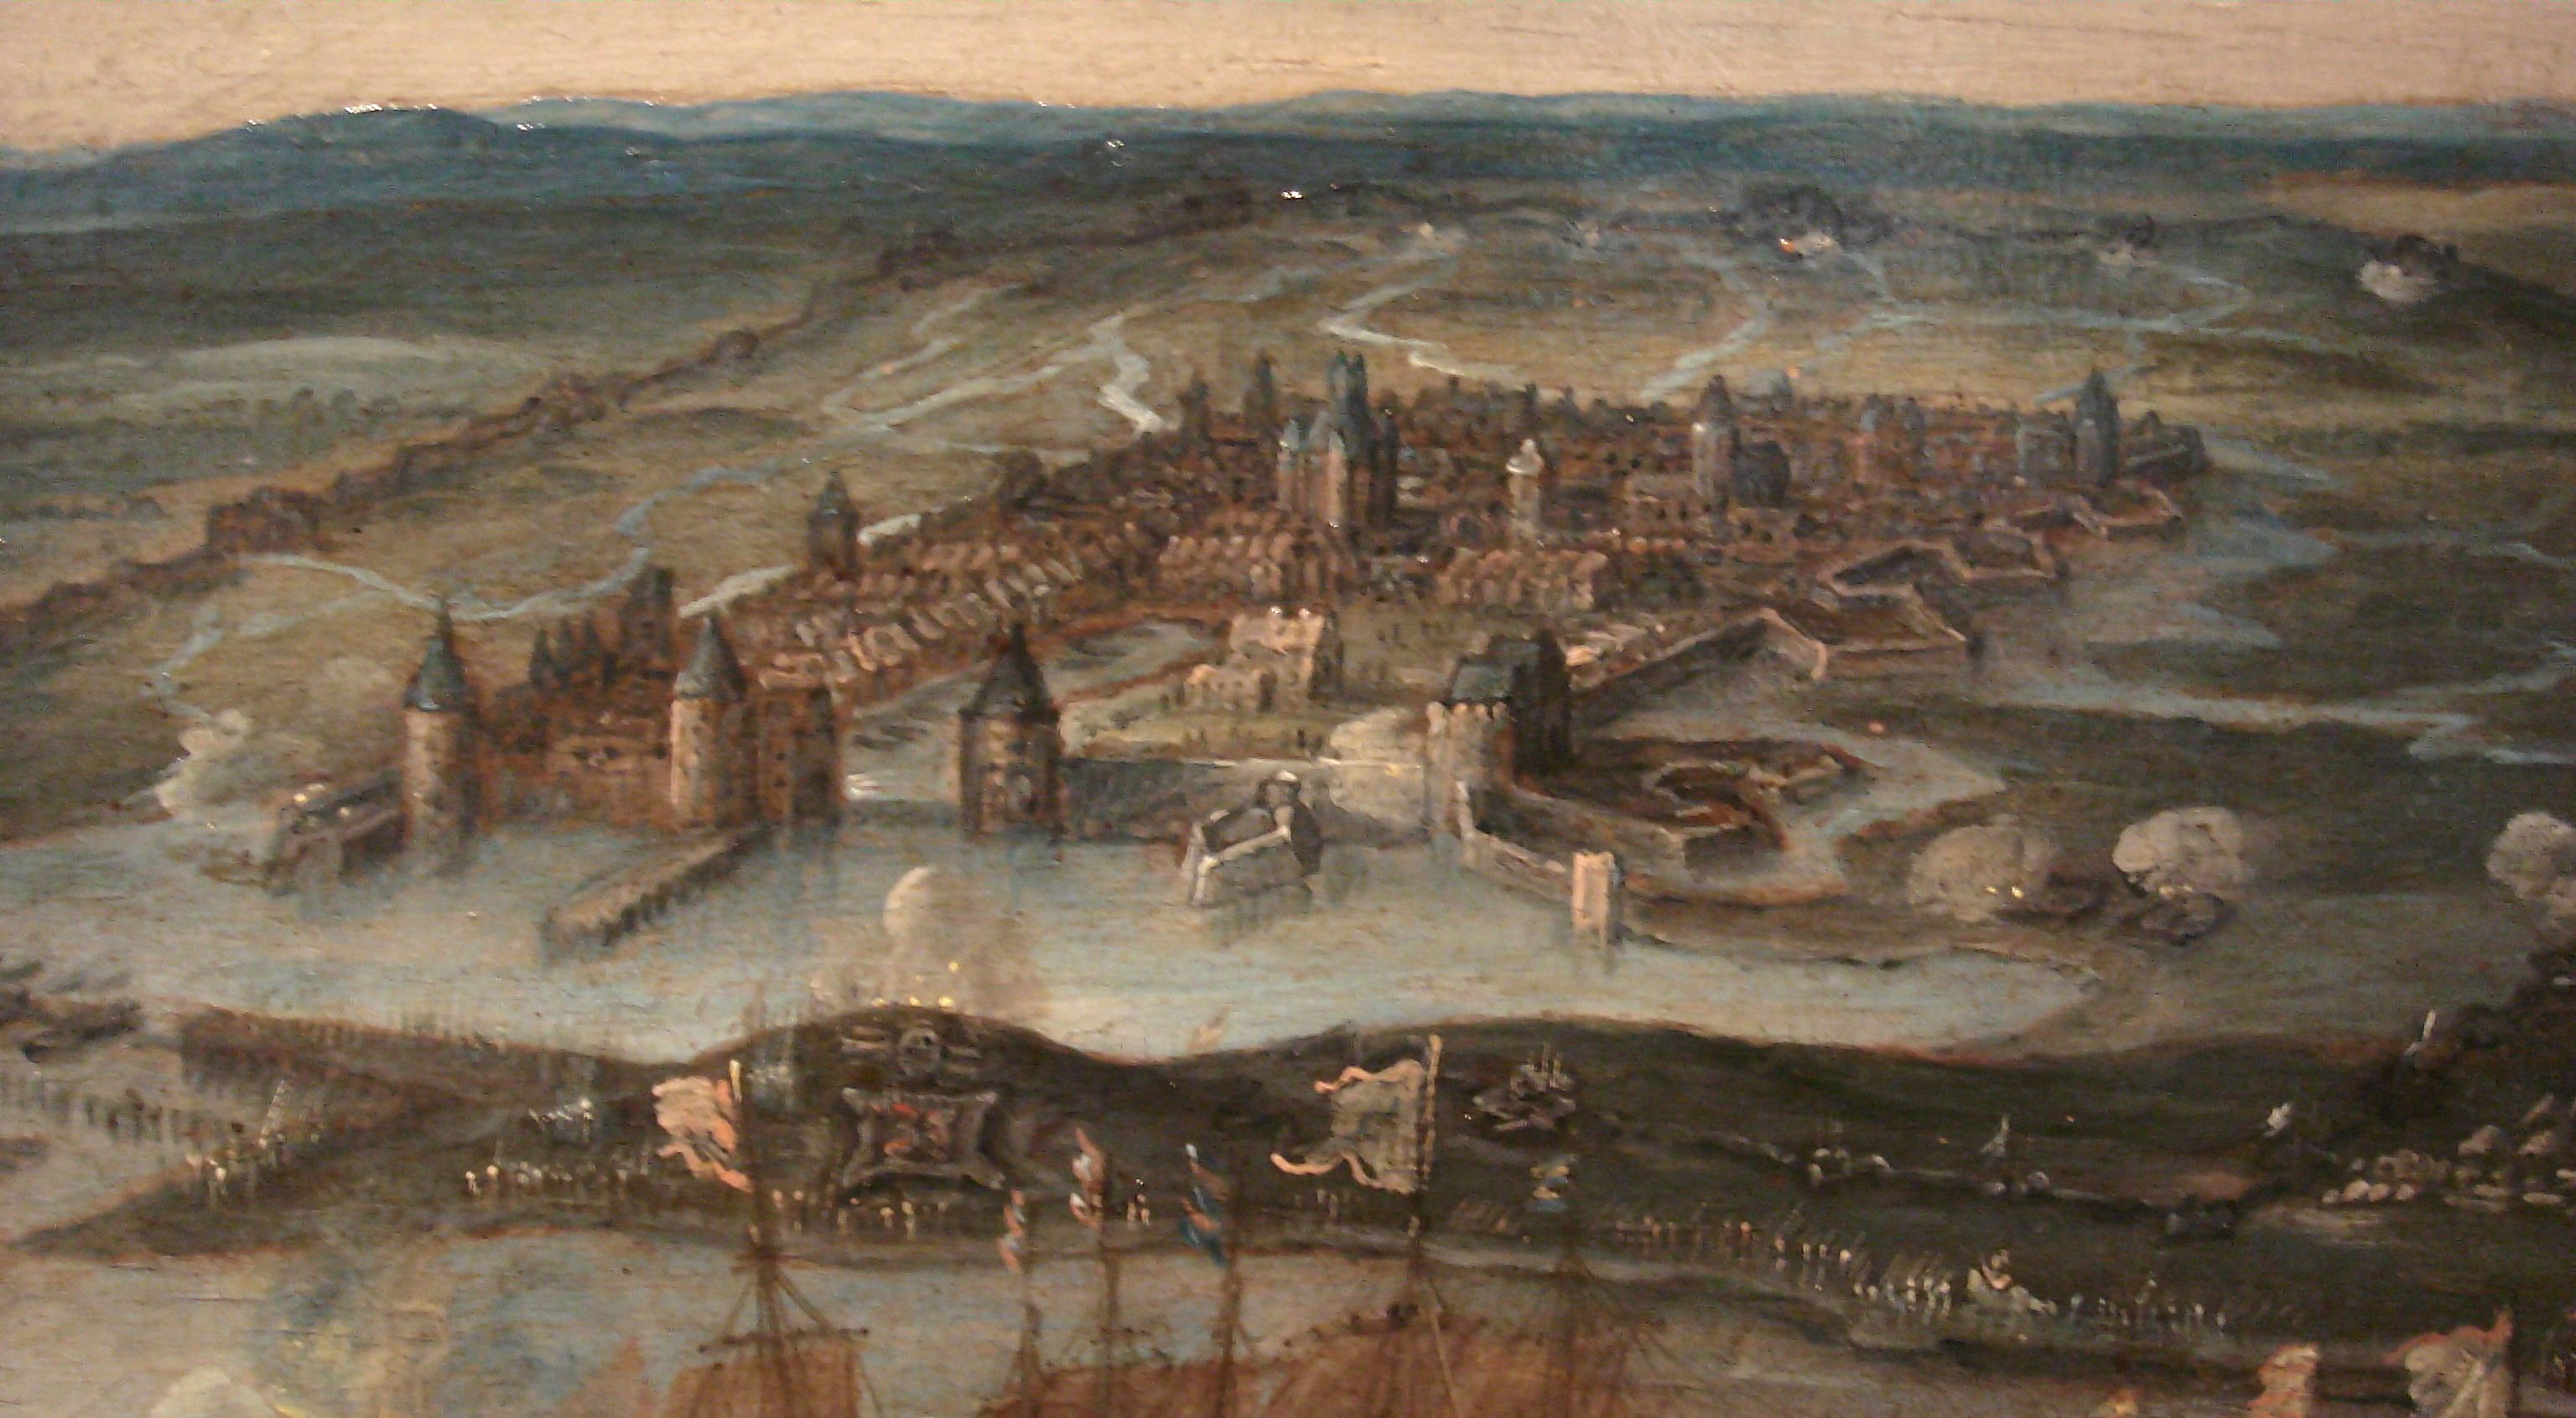 la_rochelle_during_the_1628_siege.jpg